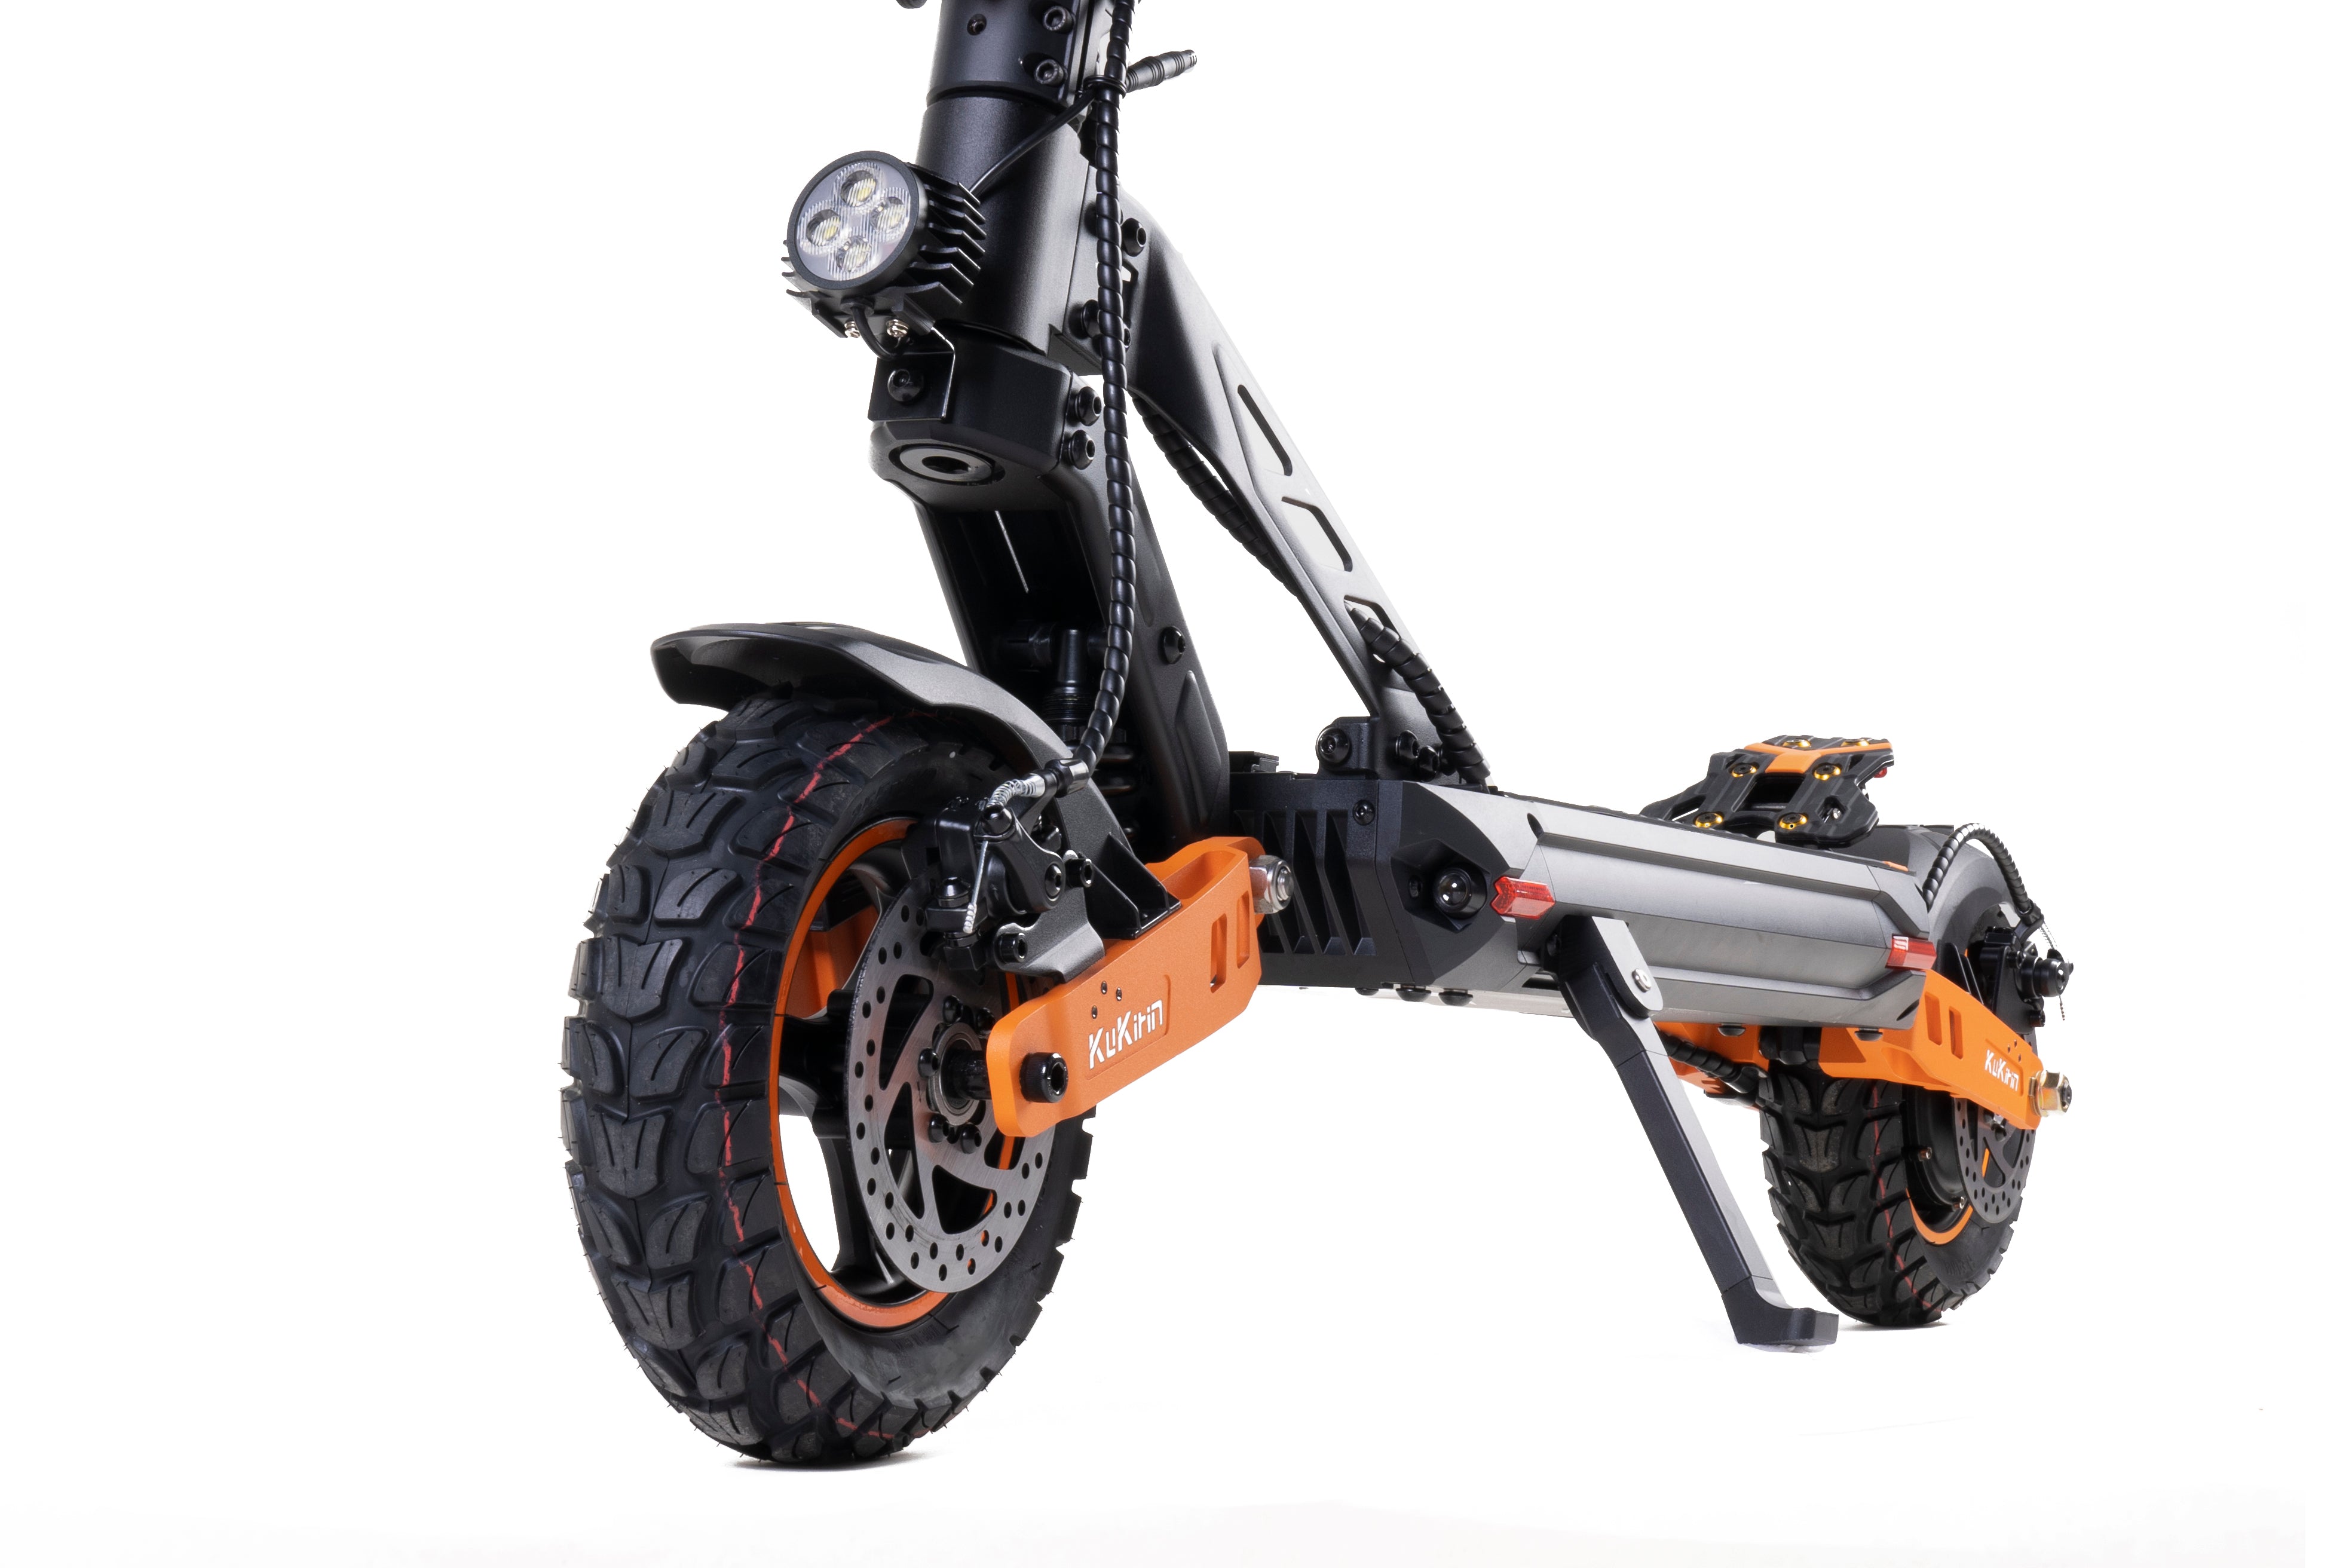 Kugoo G2 Pro Max electric scooter ireland